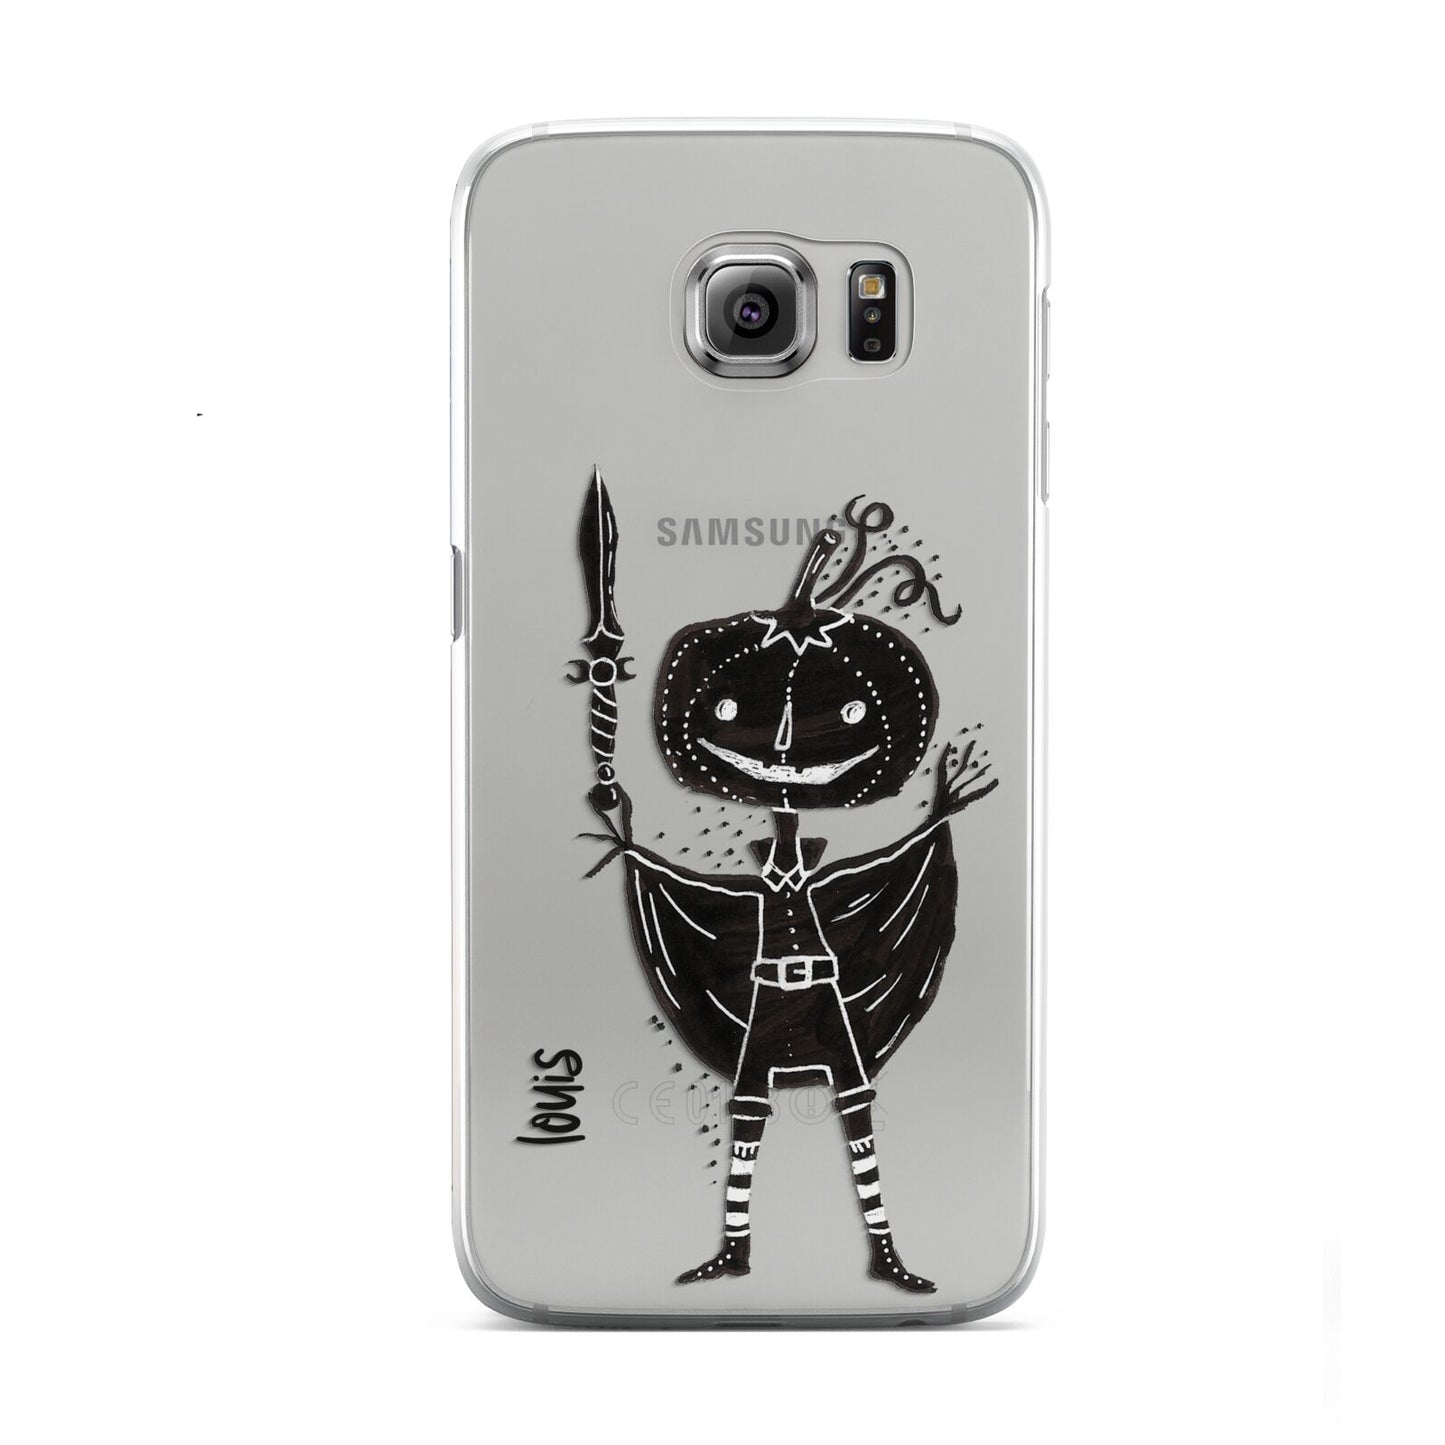 Pumpkin Head Personalised Samsung Galaxy S6 Case